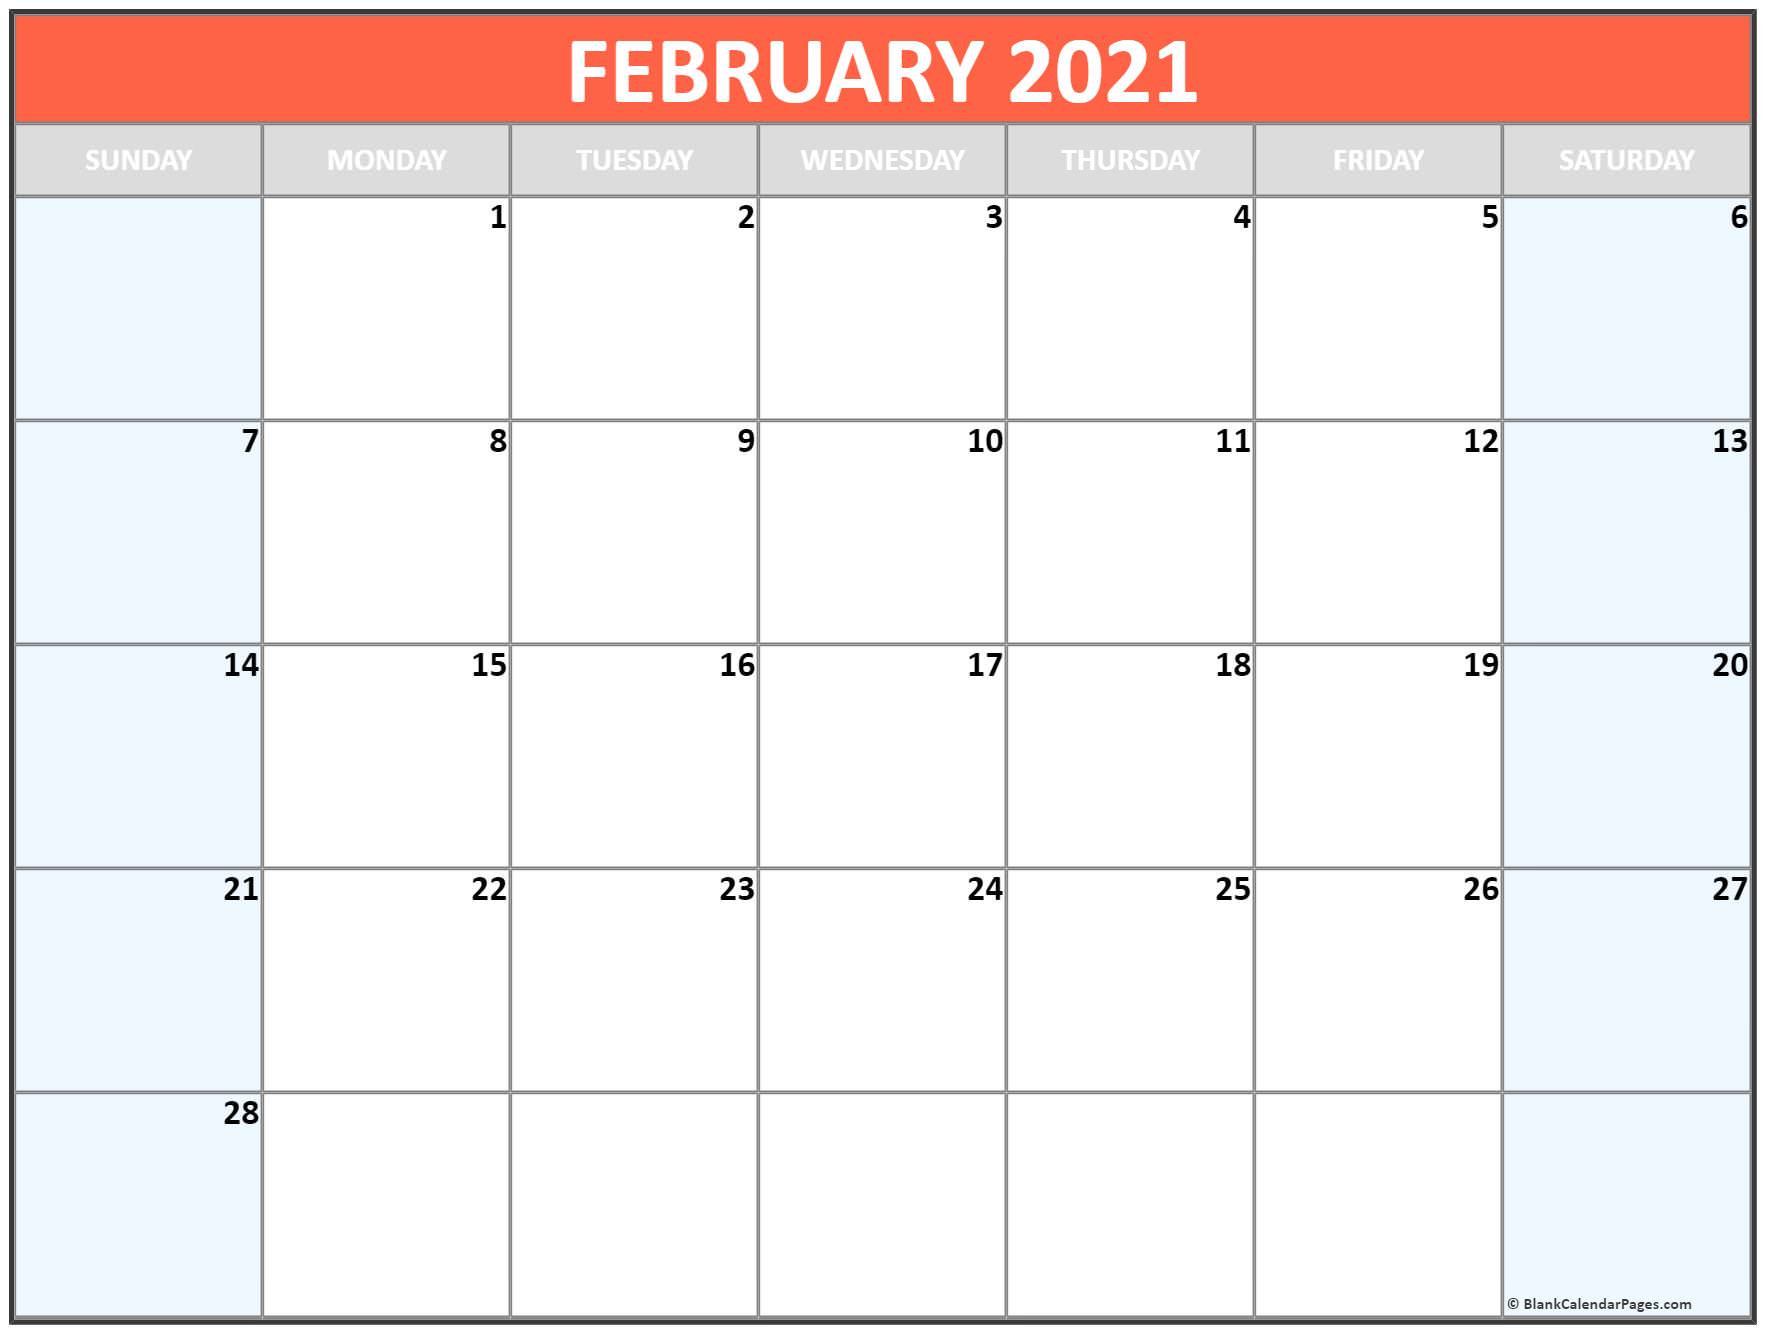 February 2021 Blank Calendar Collection.-Calendar Template 2021 February Fill In